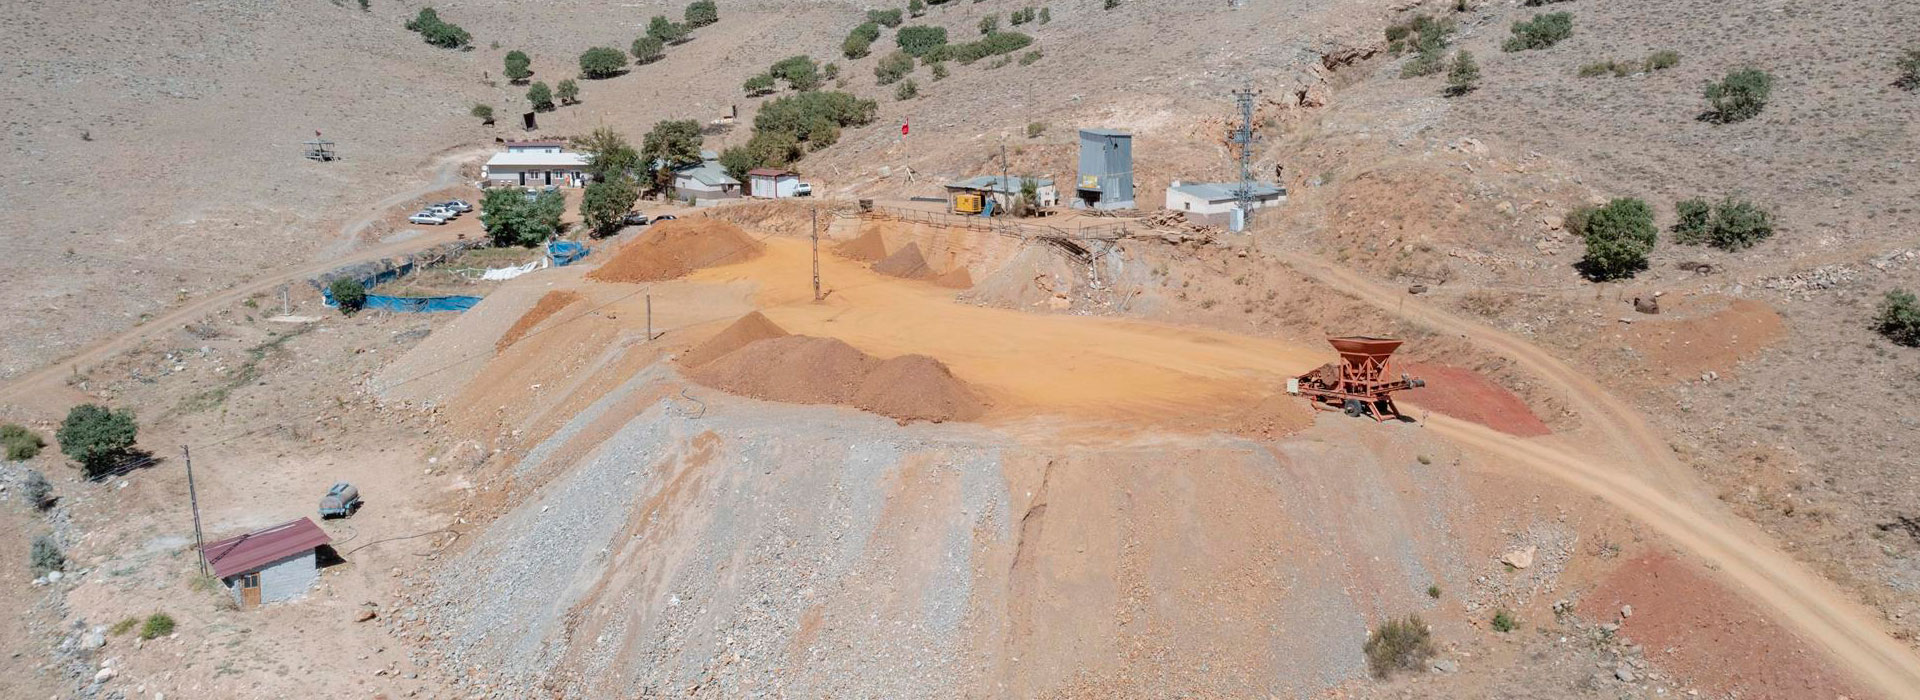 Almila Mining Site